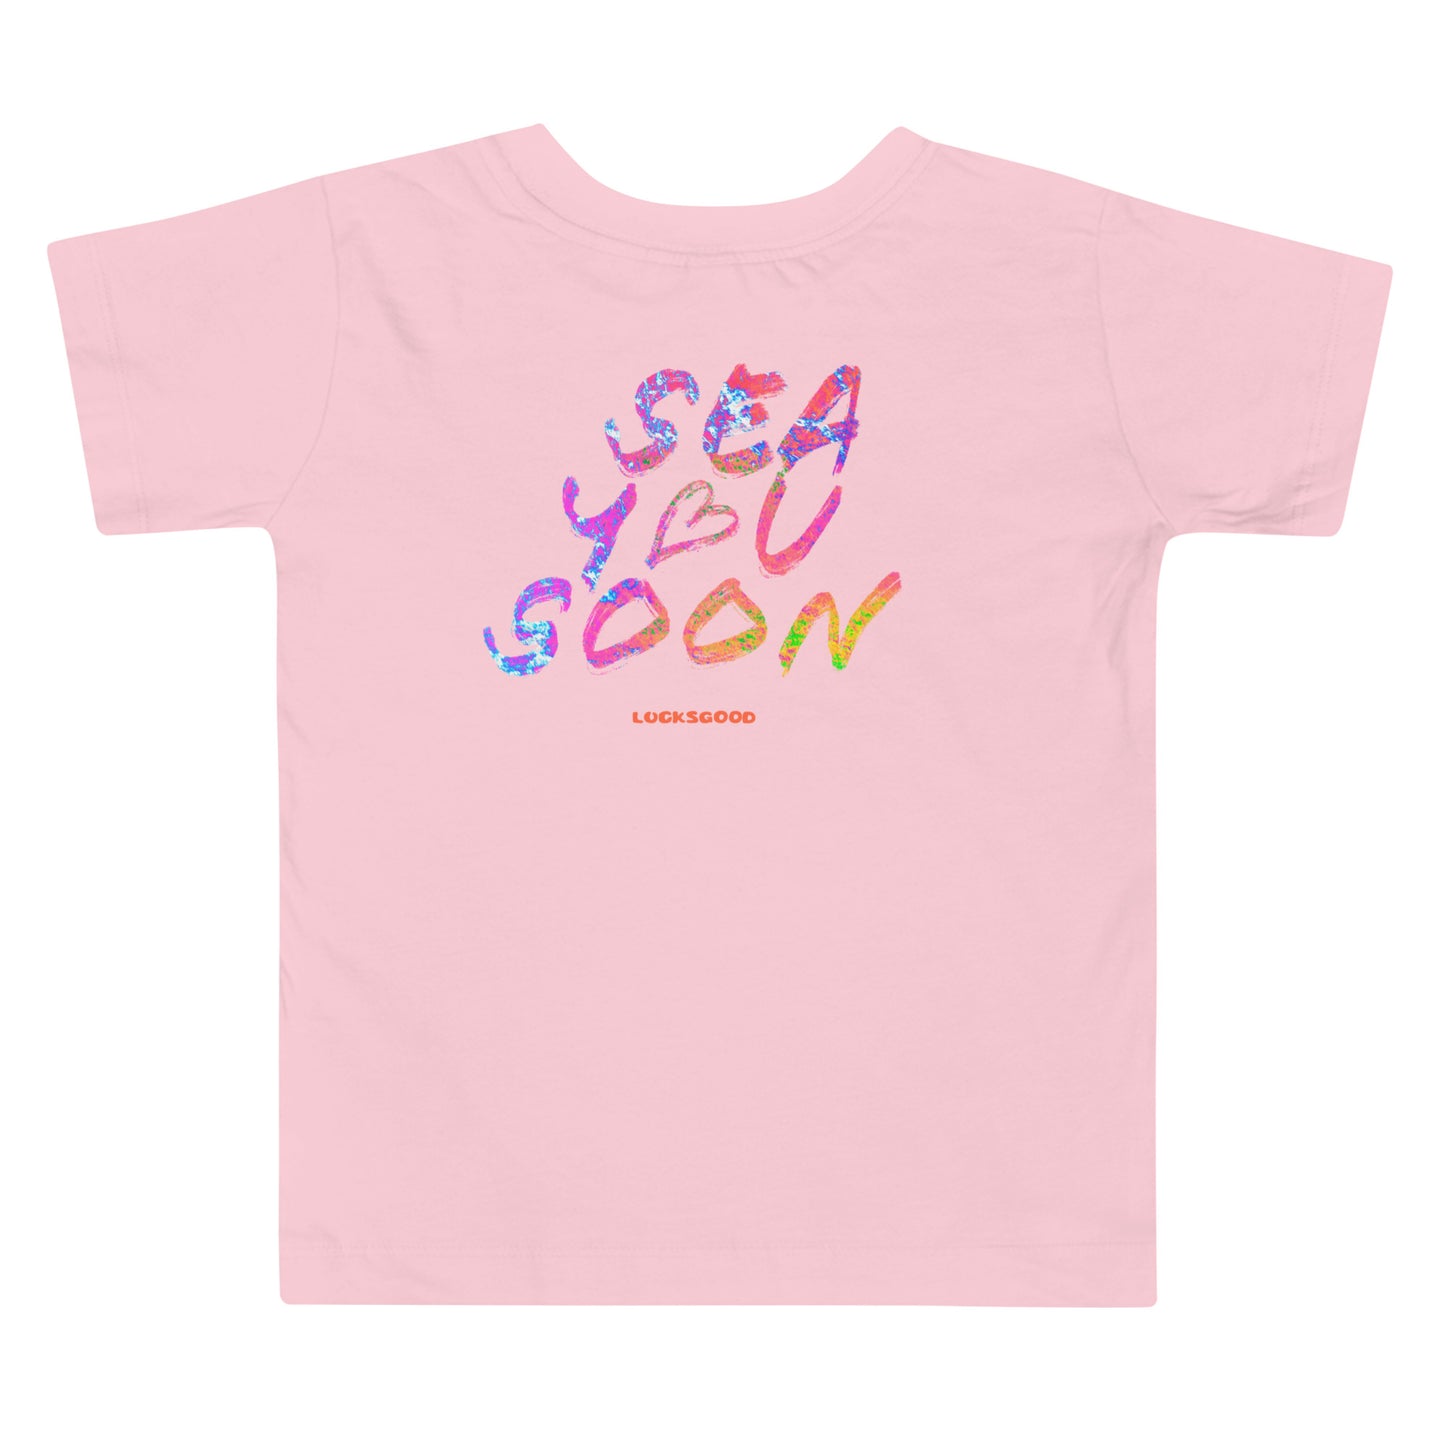 Kids T-shirt | Sea you Soon